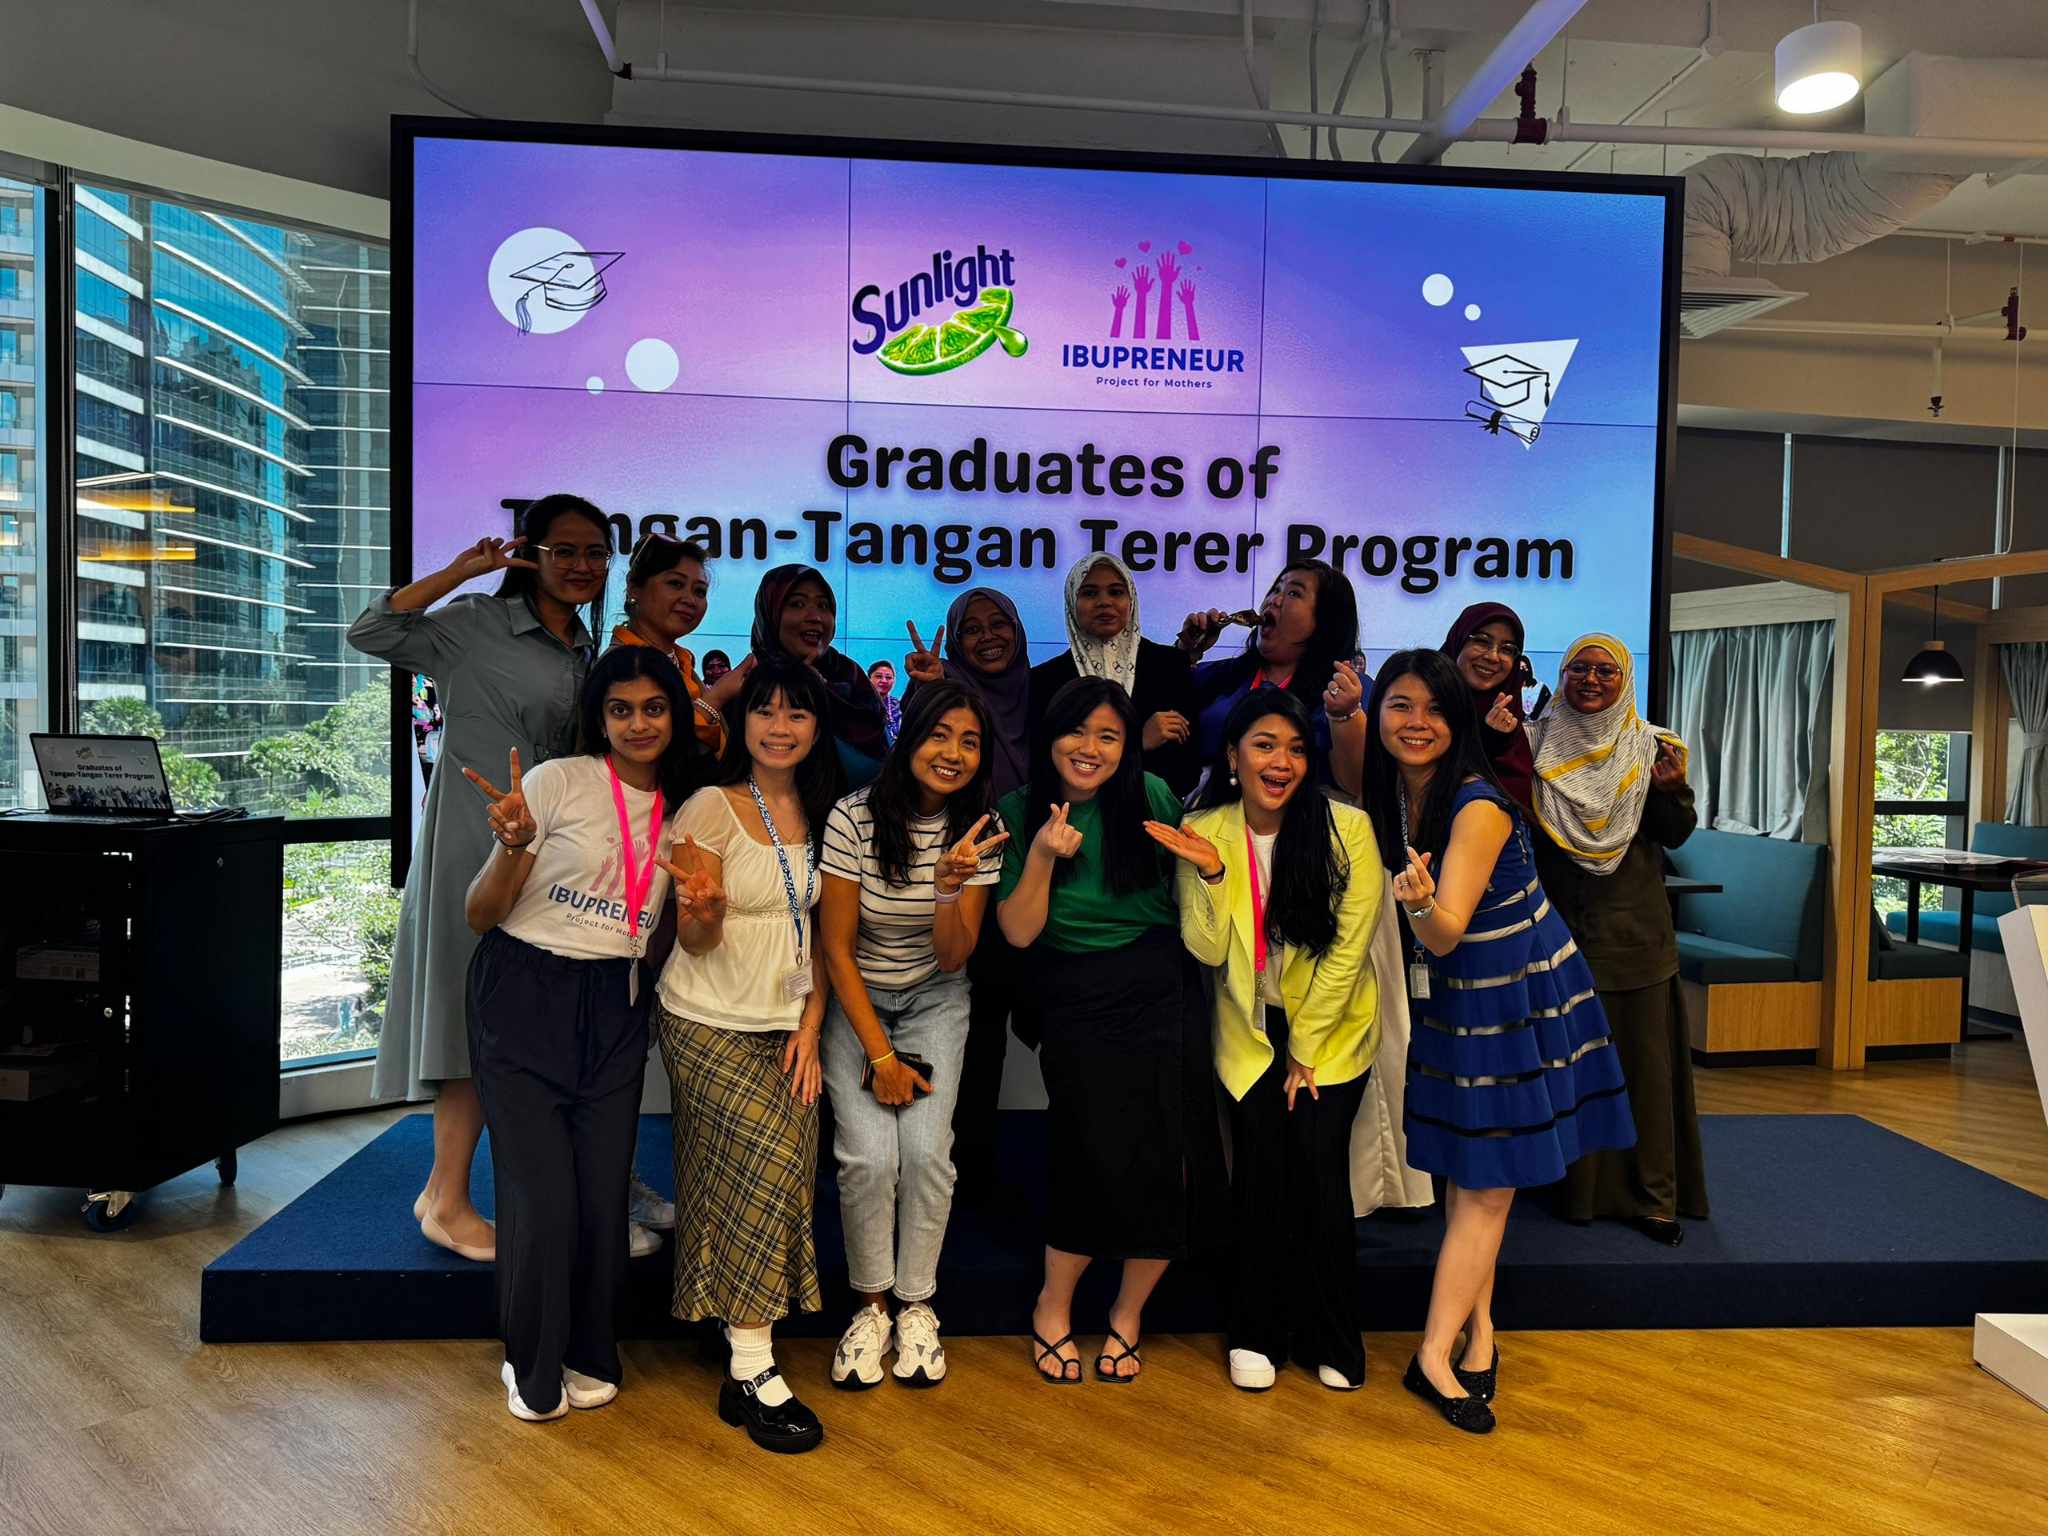 Graduates of the inaugural Tangan Tangan Terer programme organised by Sunlight Malaysia in partnership with Ibupreneur